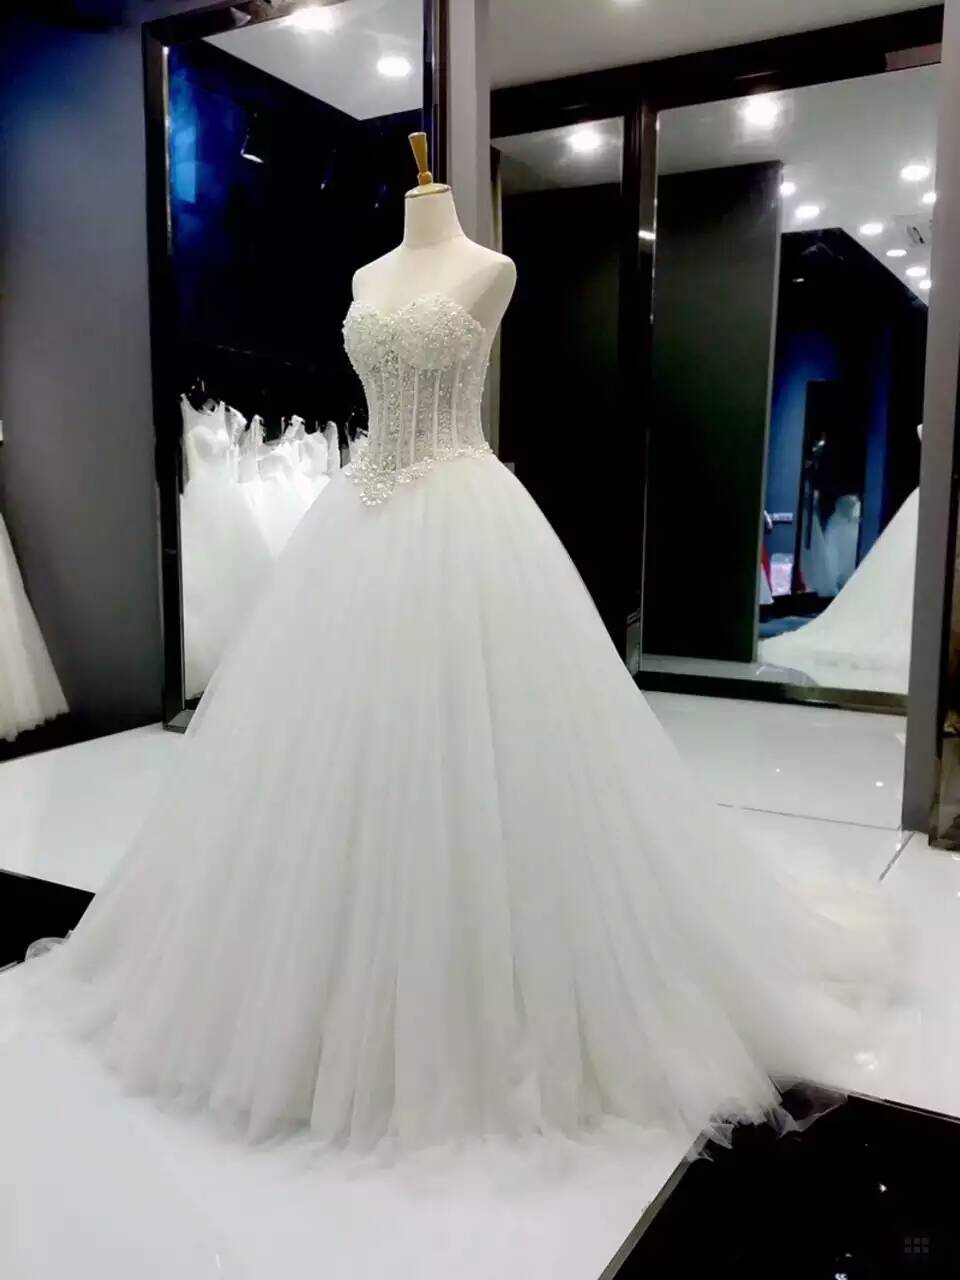 Peals Wedding Dress, Beaded Wedding Dress, Wedding Dresses For Bride, Boho Wedding Dress, Sweetheart Neckline Wedding Dress, Wedding Gown,